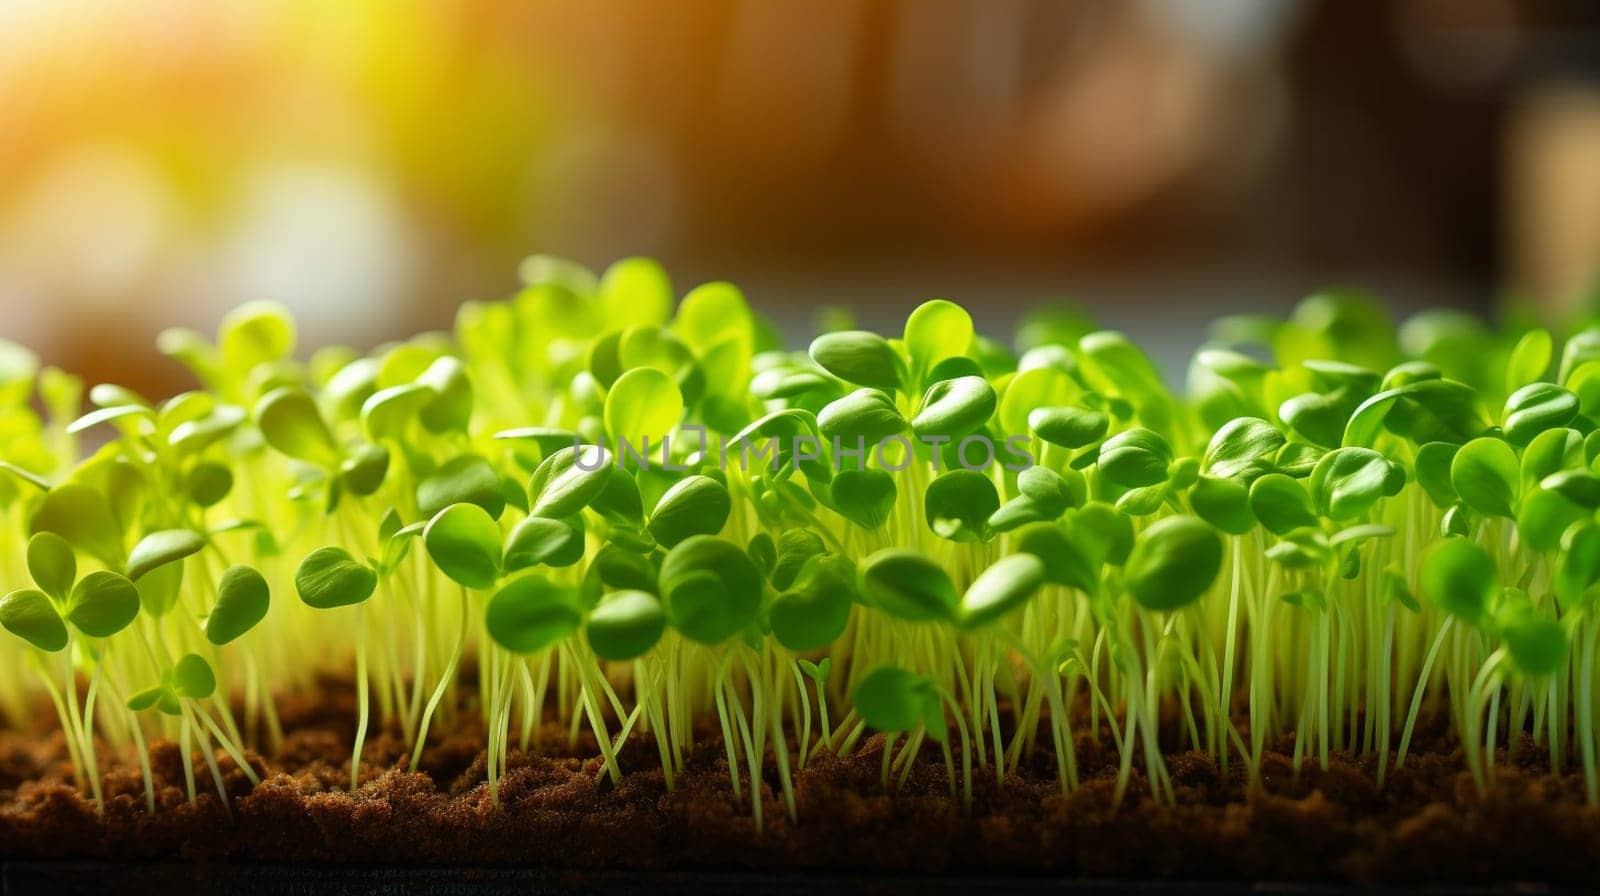 Vibrant green seedlings bask in sunlight. High quality photo